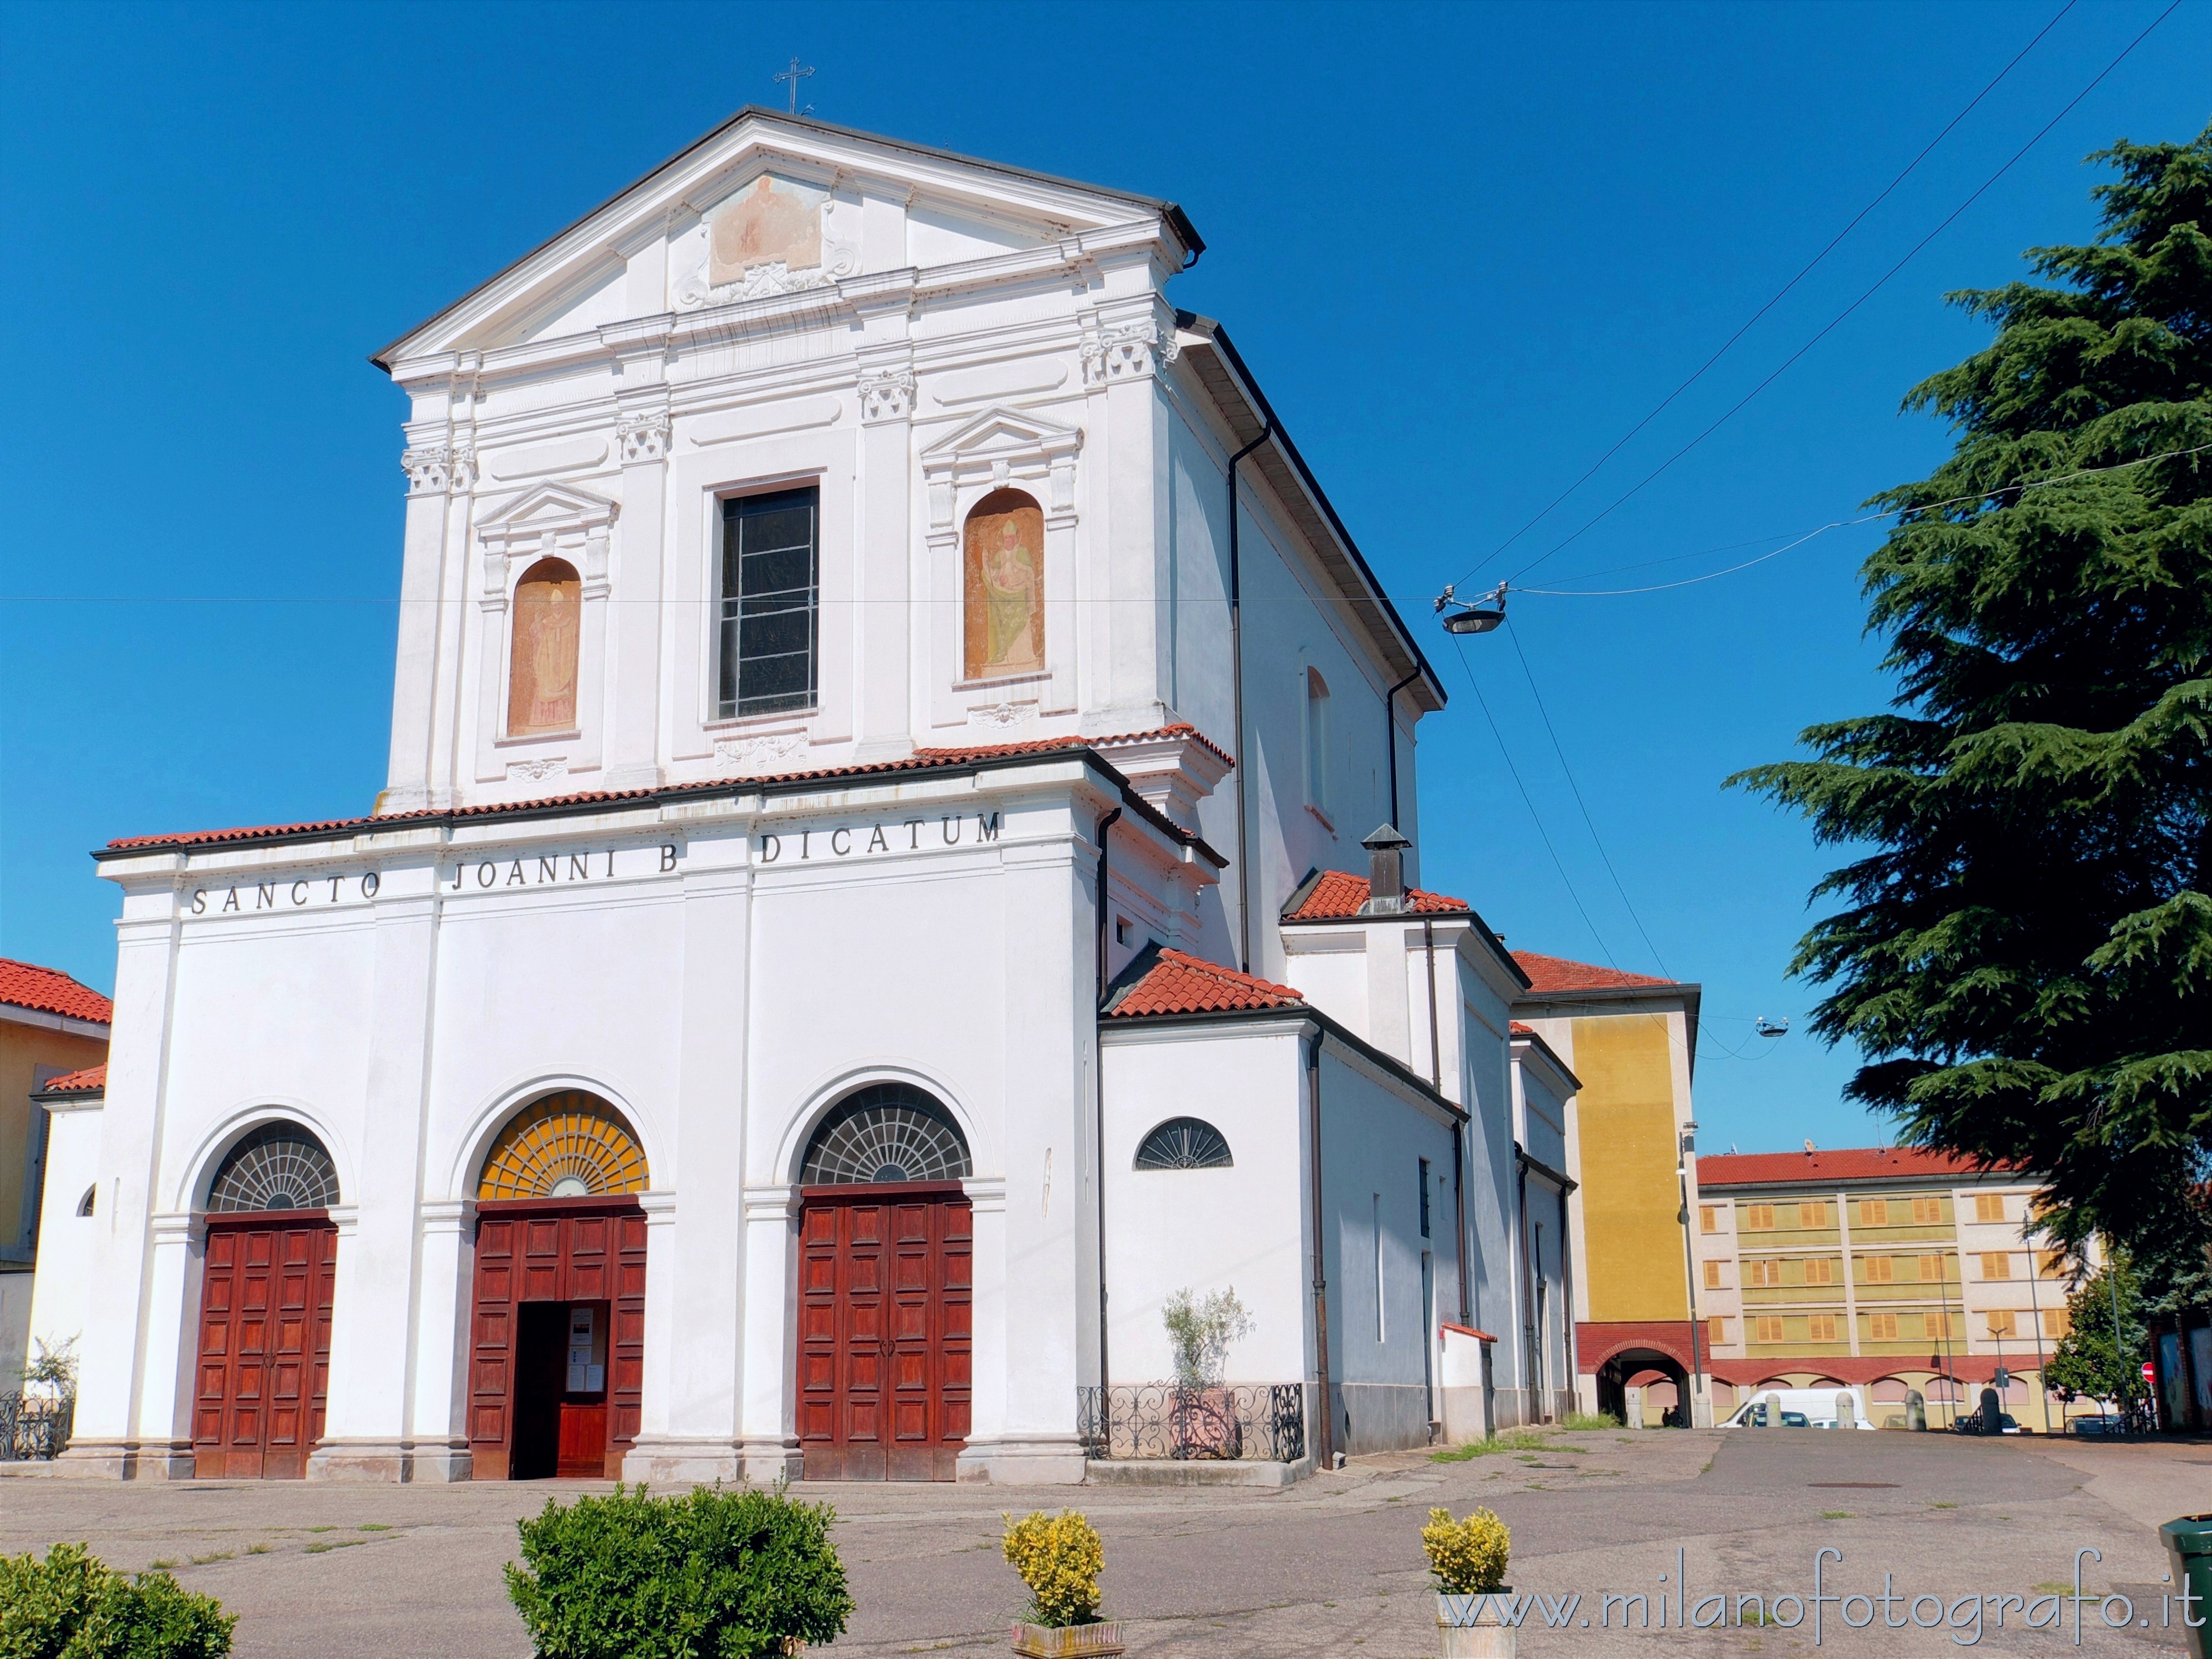 Milan (Italy): Church of San Giovanni Battista in Trenno - Milan (Italy)